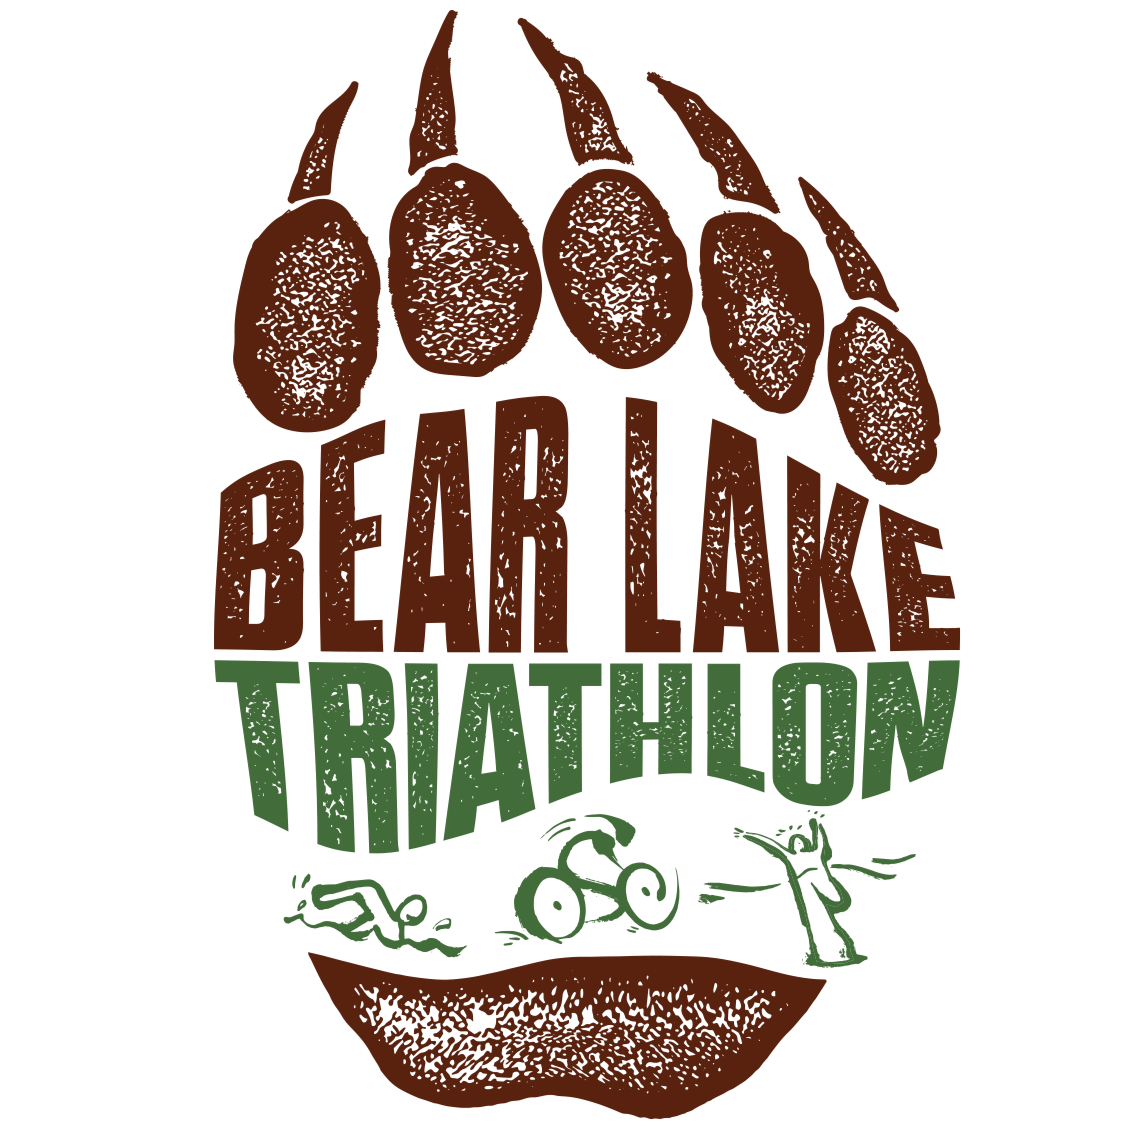 Bear Lake Triathlon